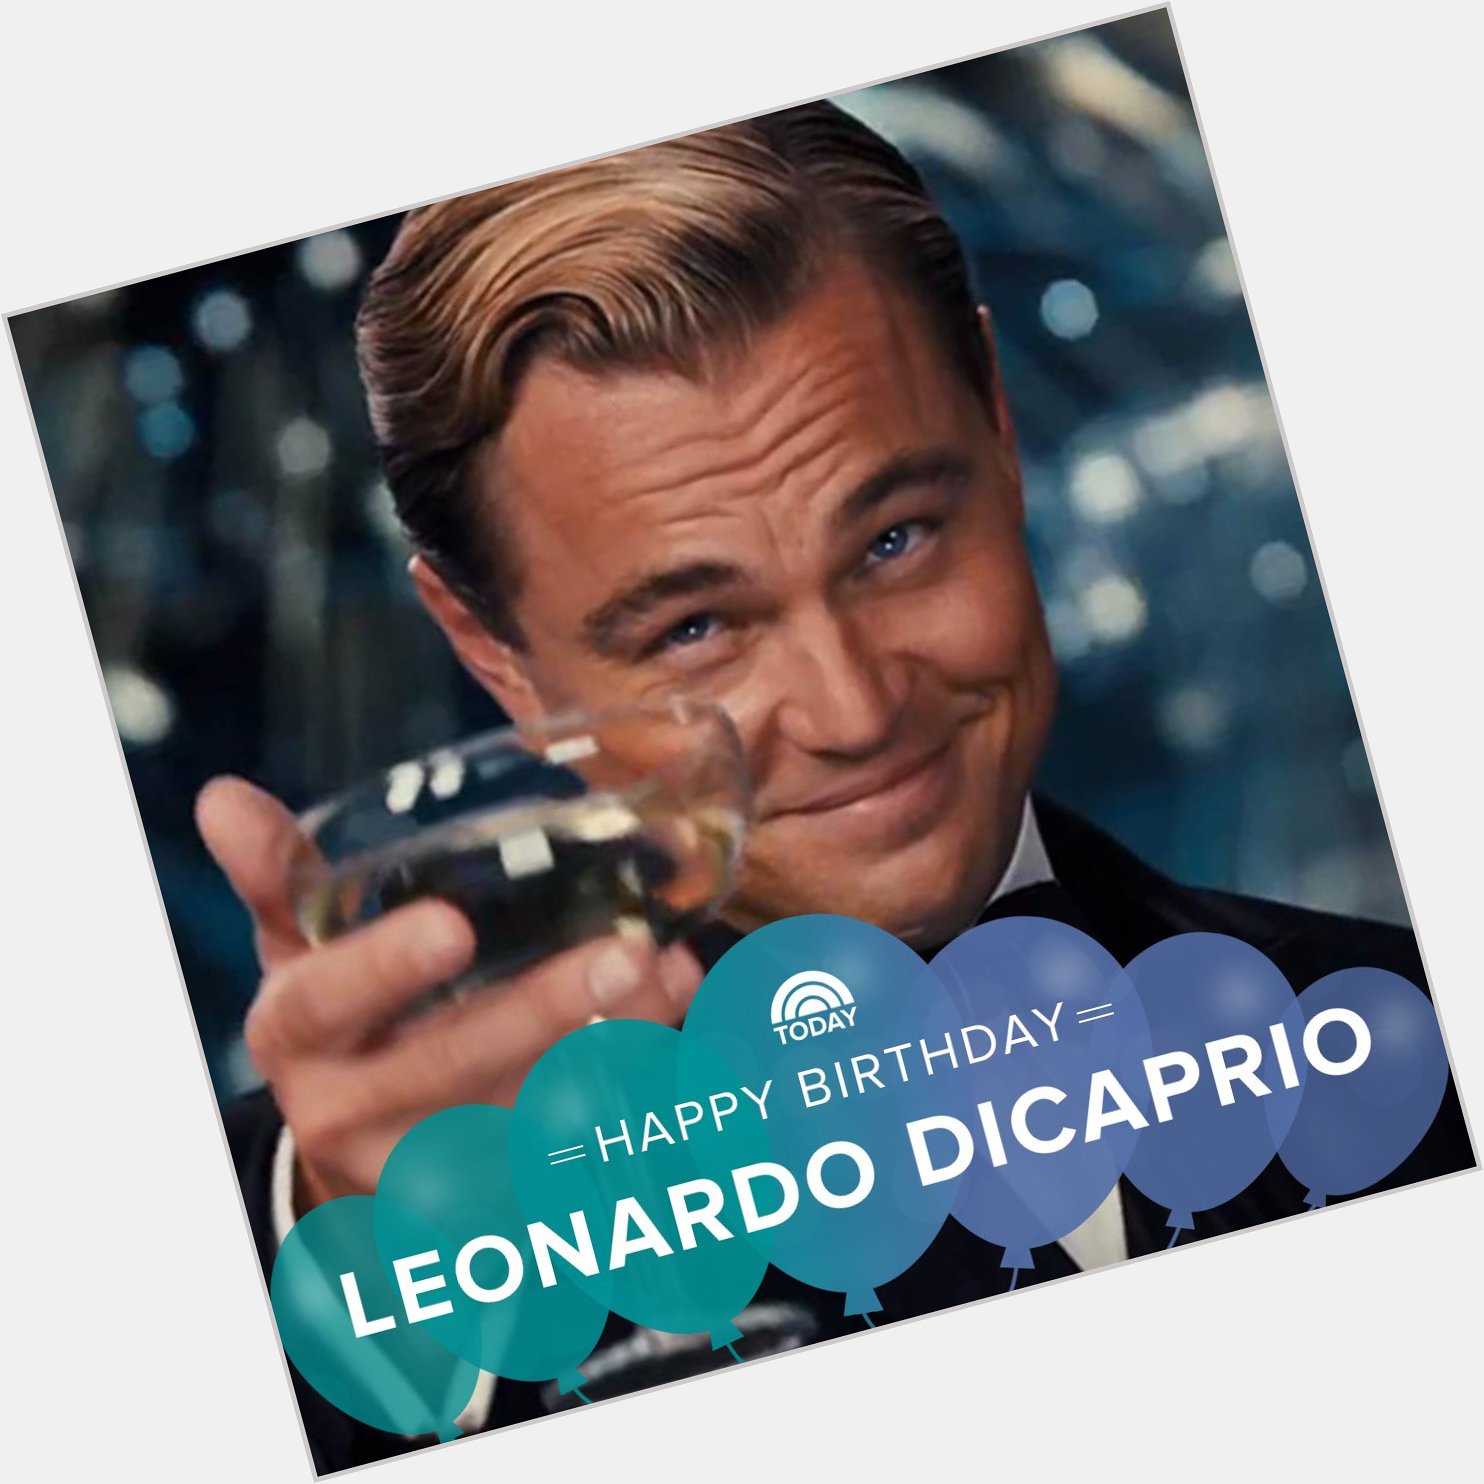 Happy birthday, Leonardo DiCaprio!  